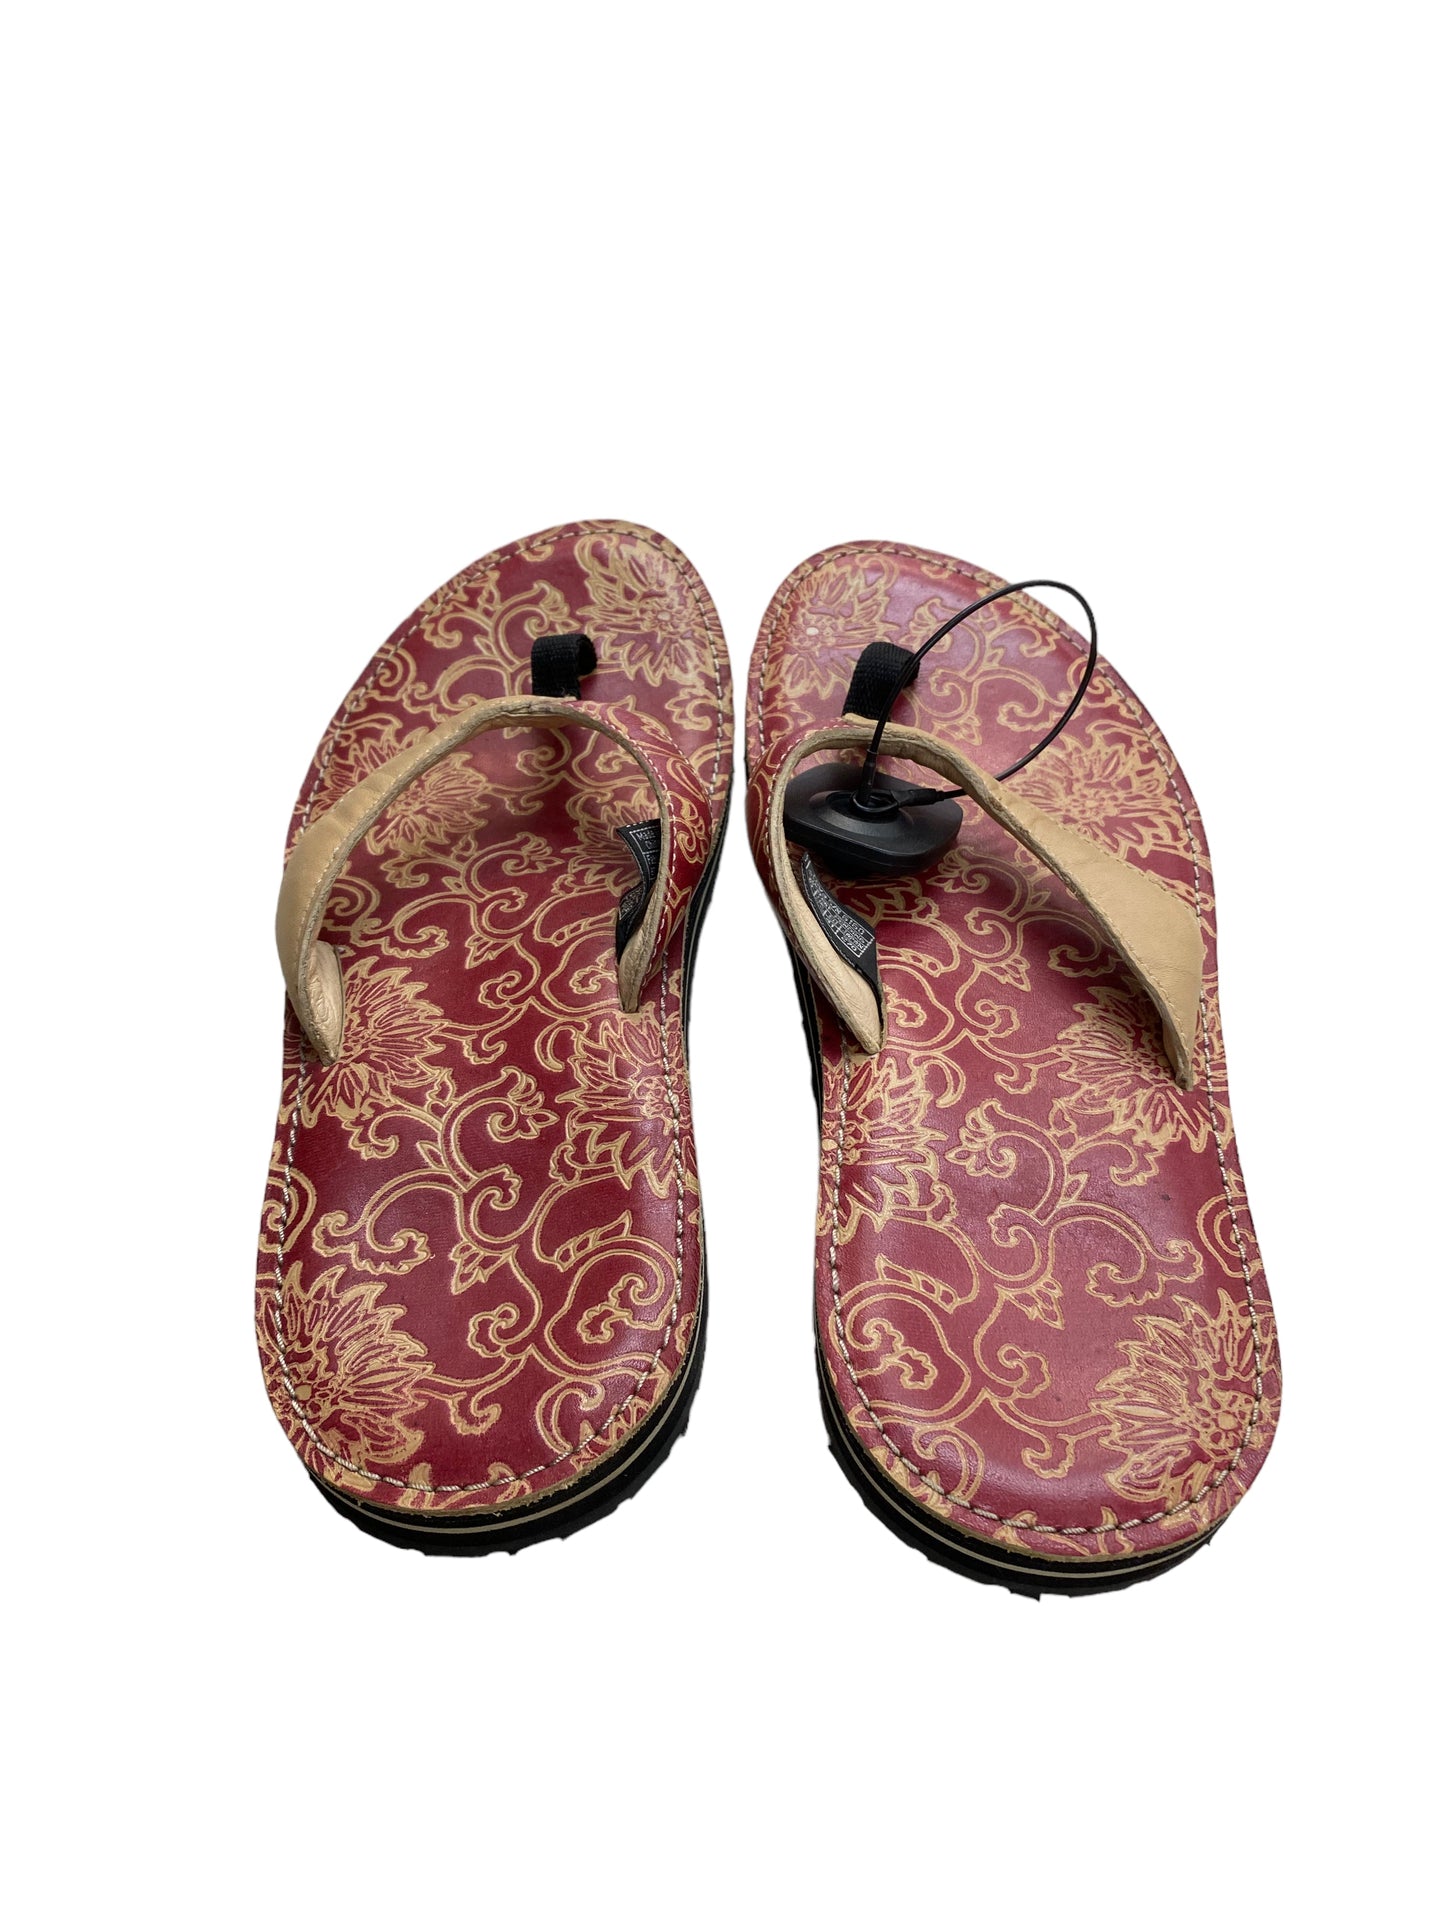 Multi-colored Sandals Flats Teva, Size 10